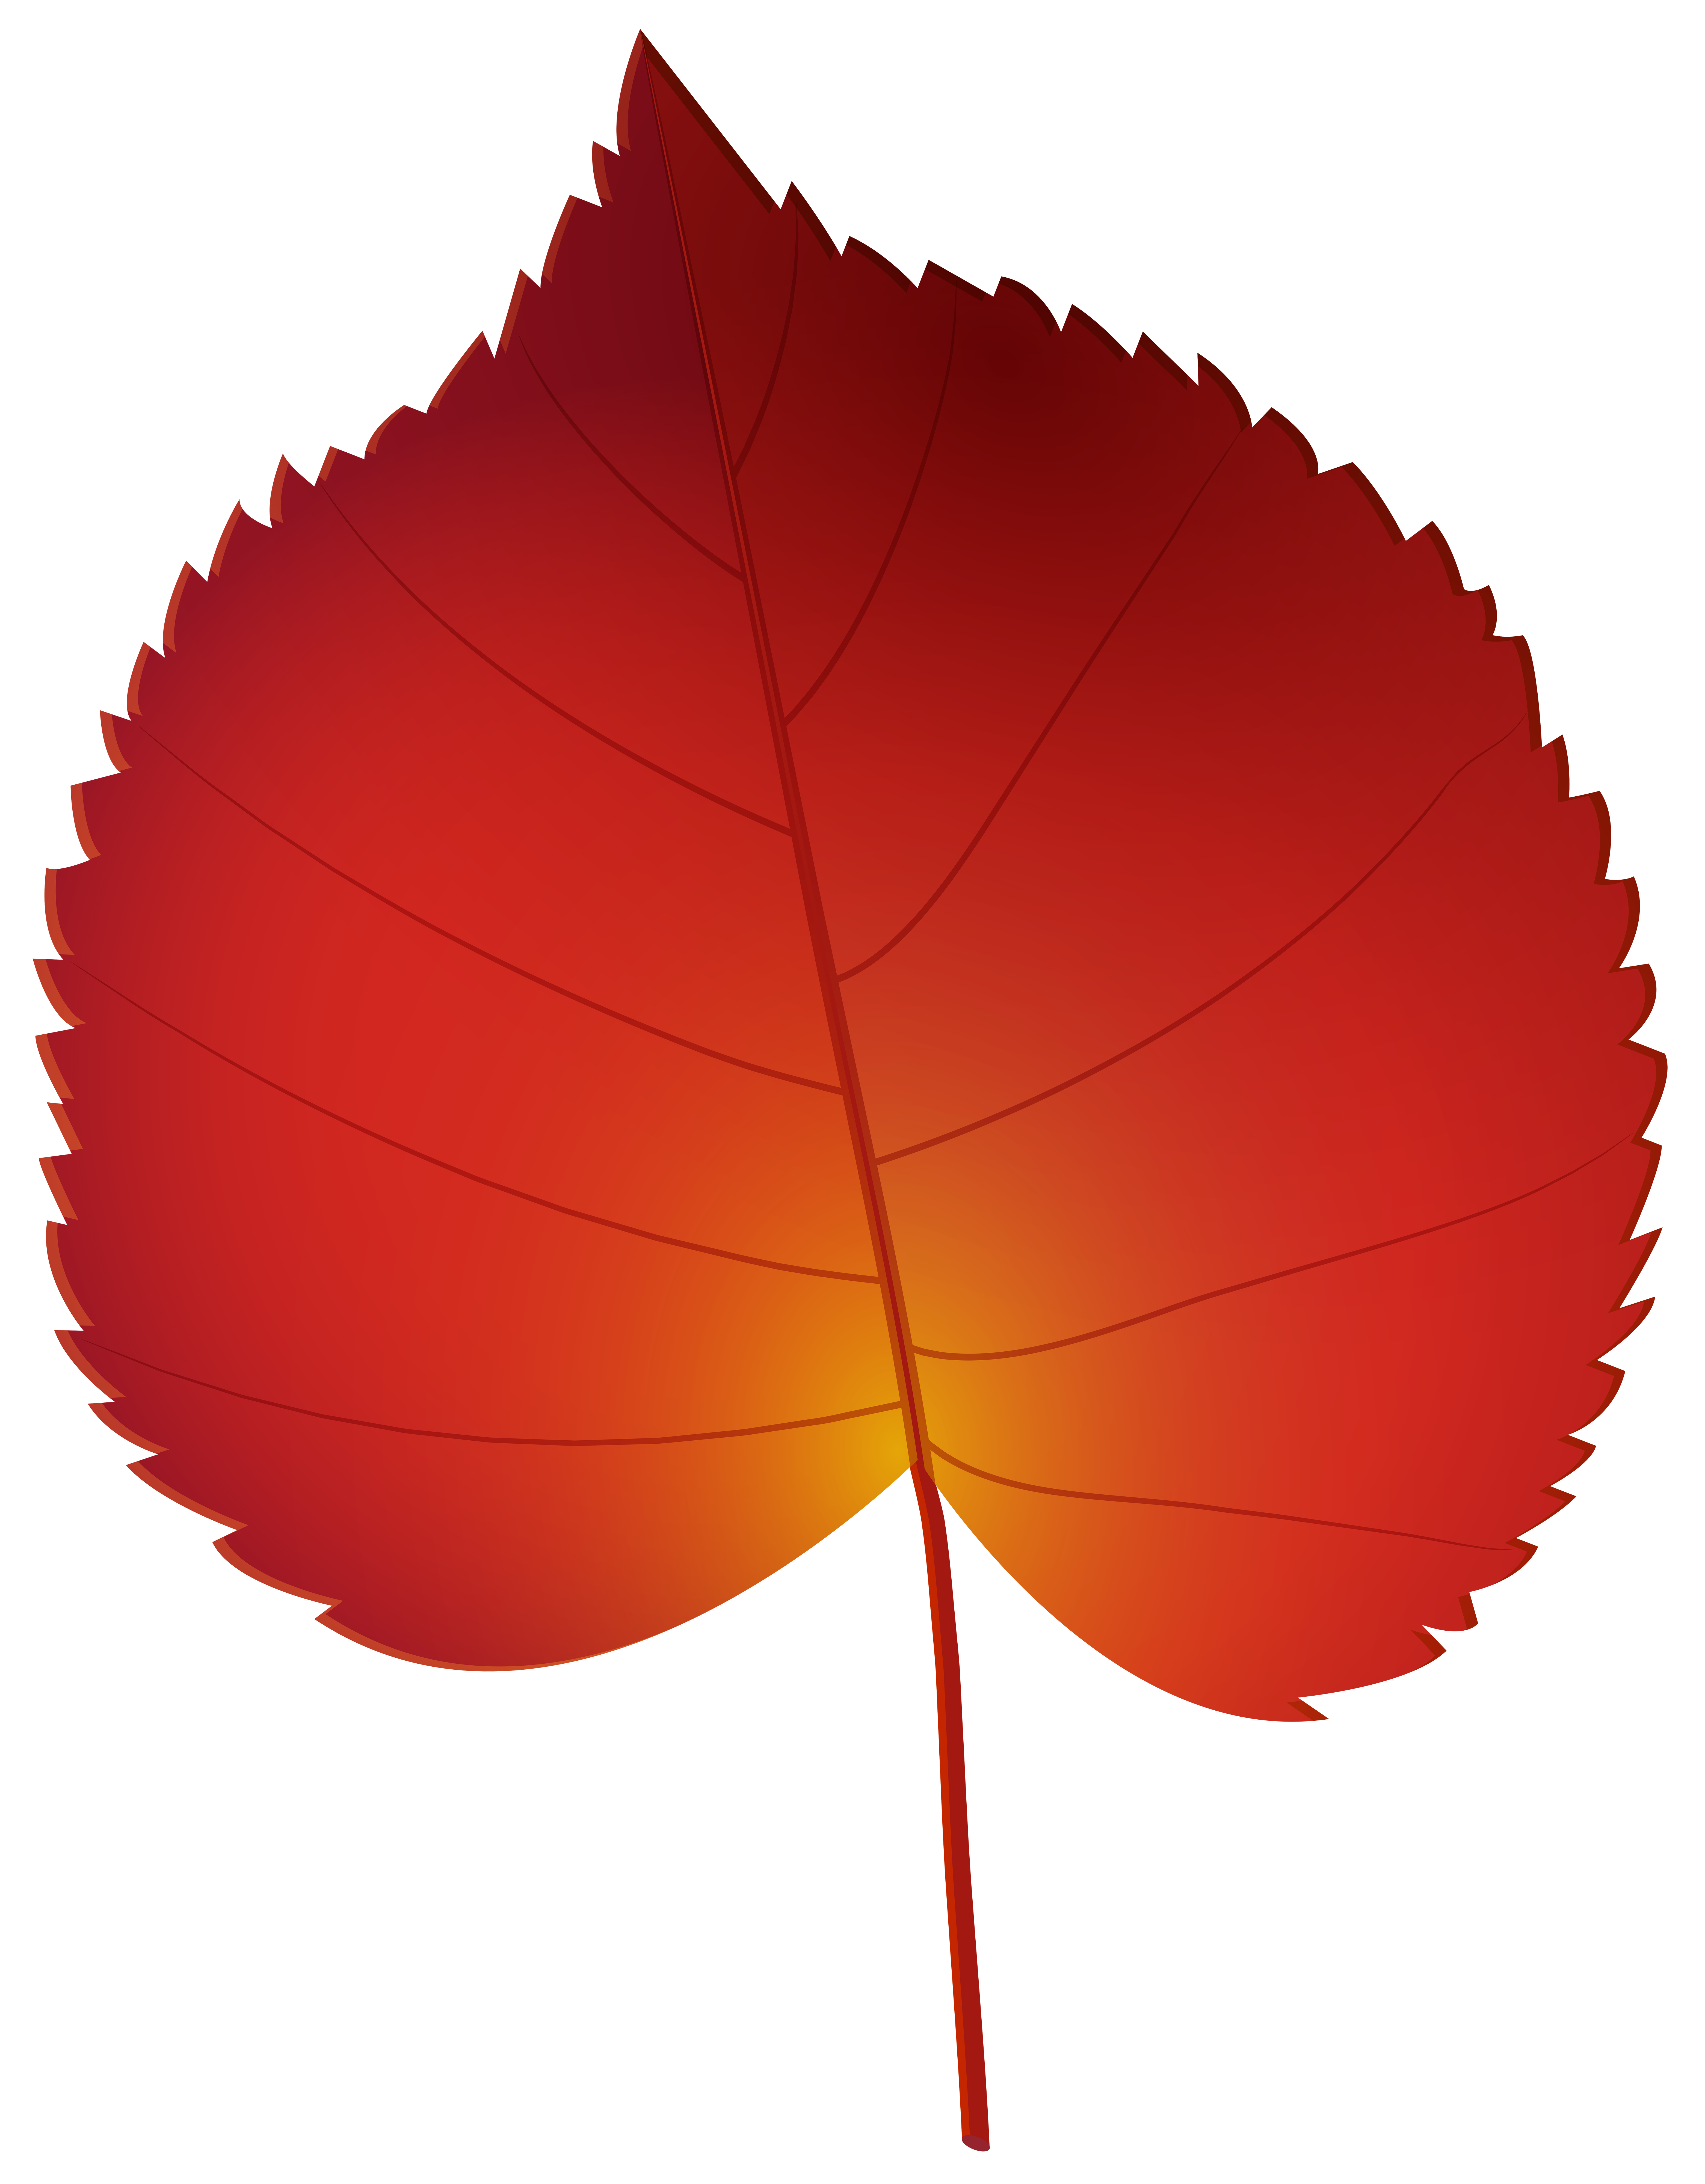 Red Autumn Leaf PNG Clip Art - Best WEB Clipart